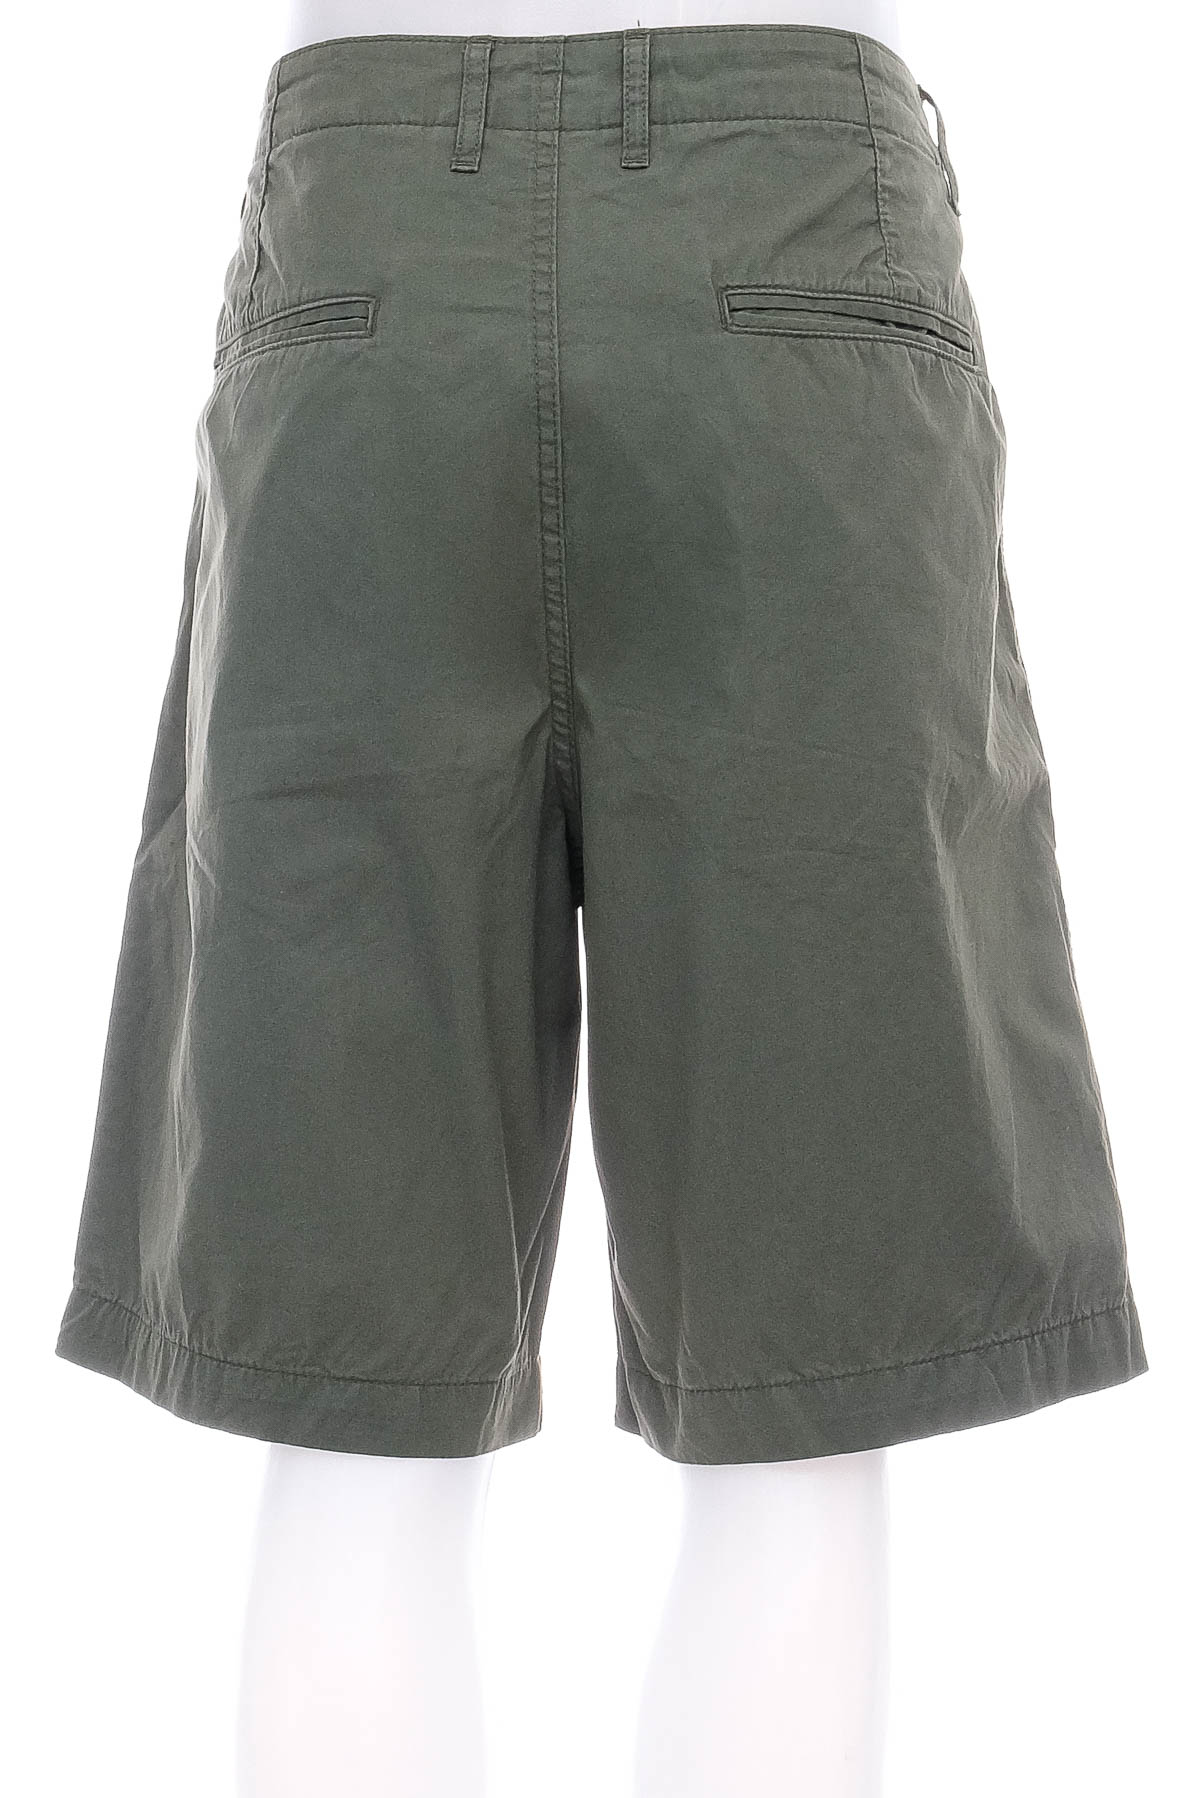 Men's shorts - L.O.G.G. - 1